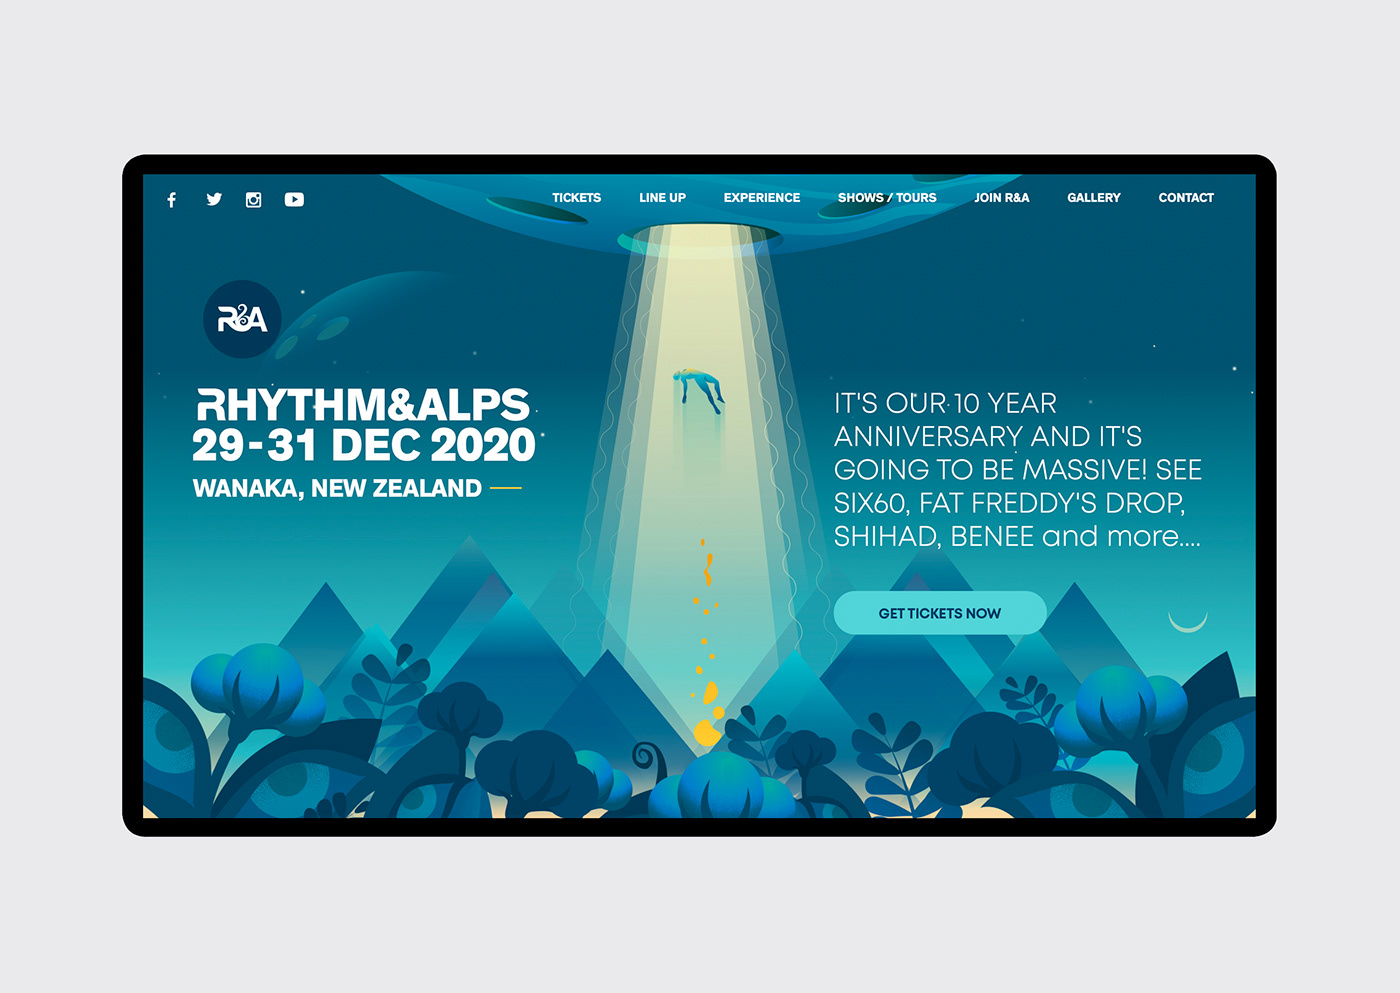 identity ILLUSTRATION  Music Festival New Zealand psychedelic R&A rhythm & alps Space  UI/UX Design Website